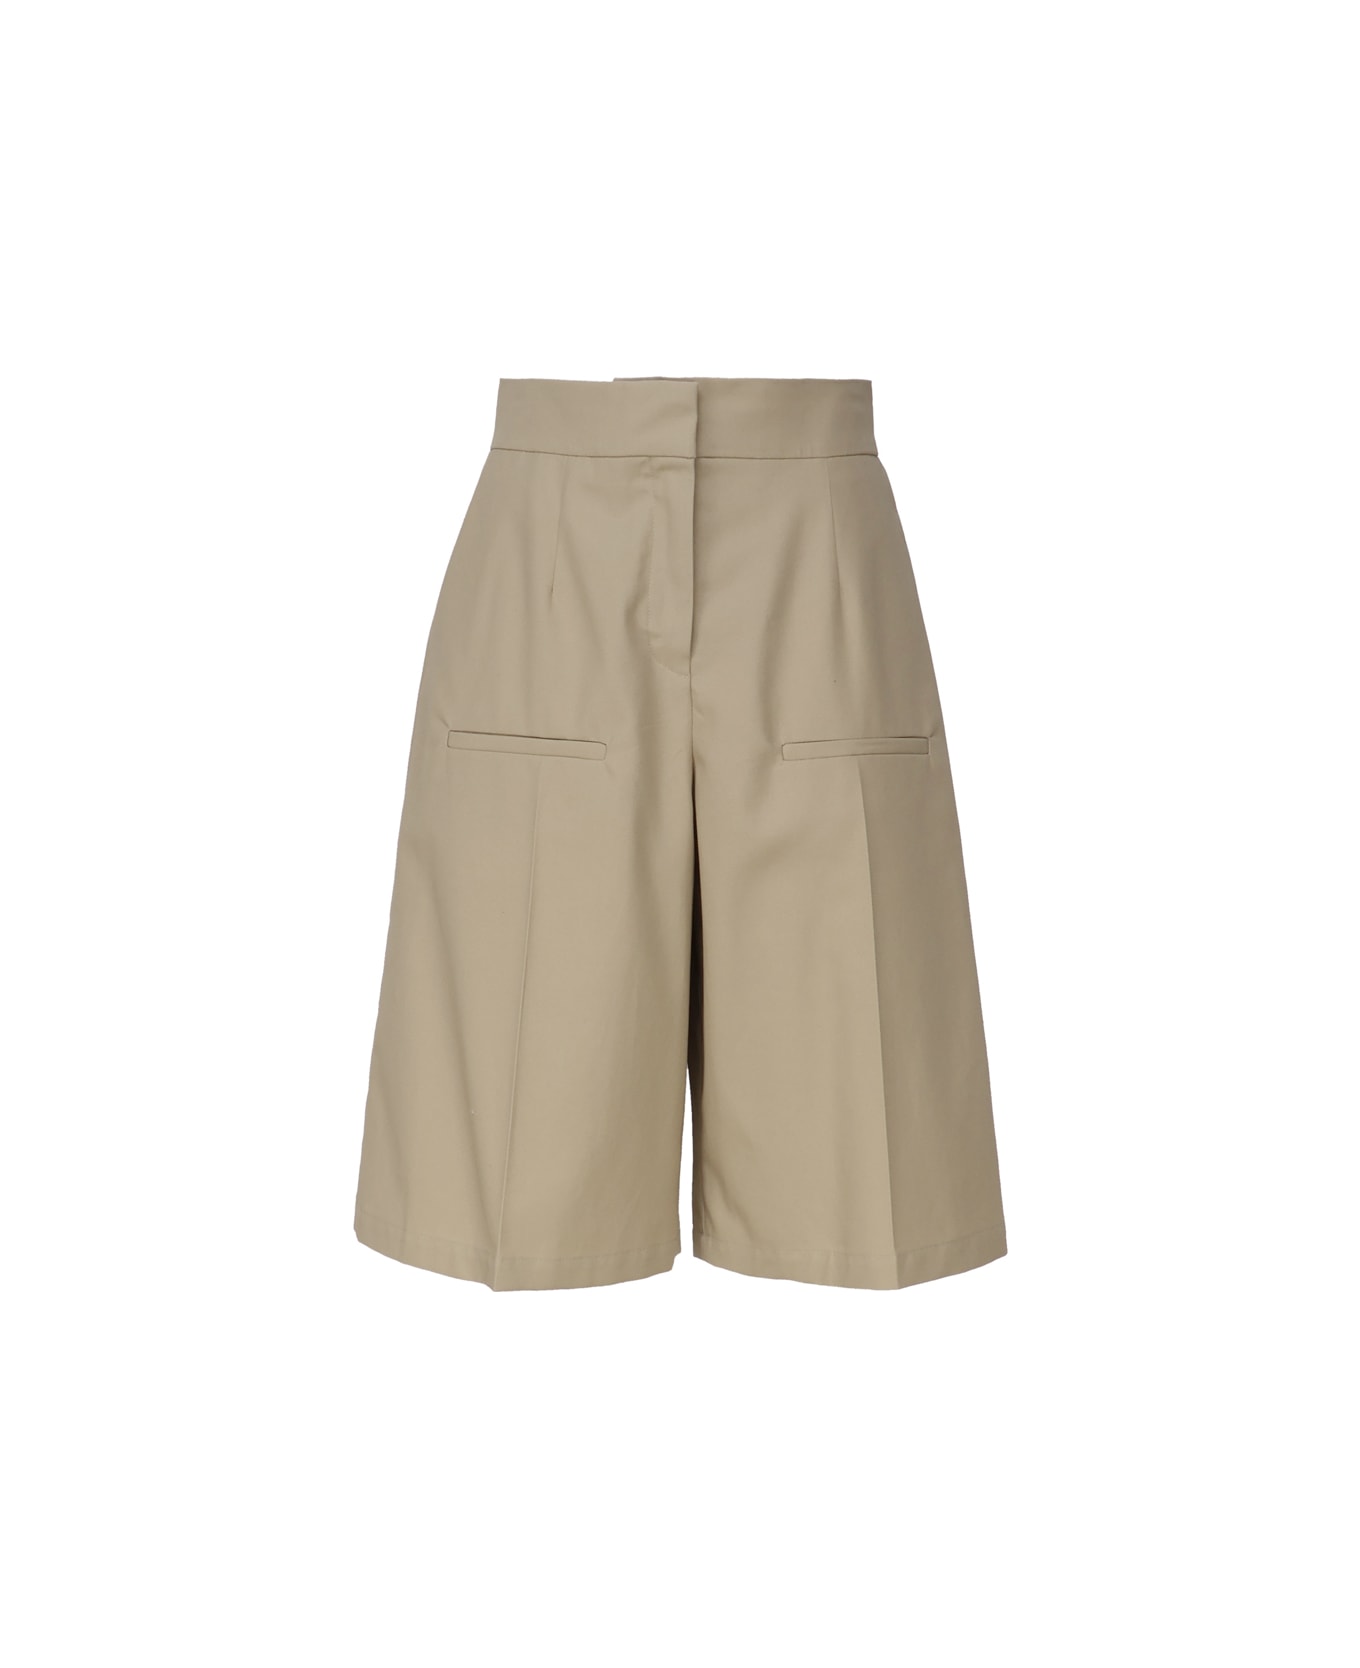 Loewe Tailored Shorts Crafted In Lightweight Cotton Gabardine - Beige